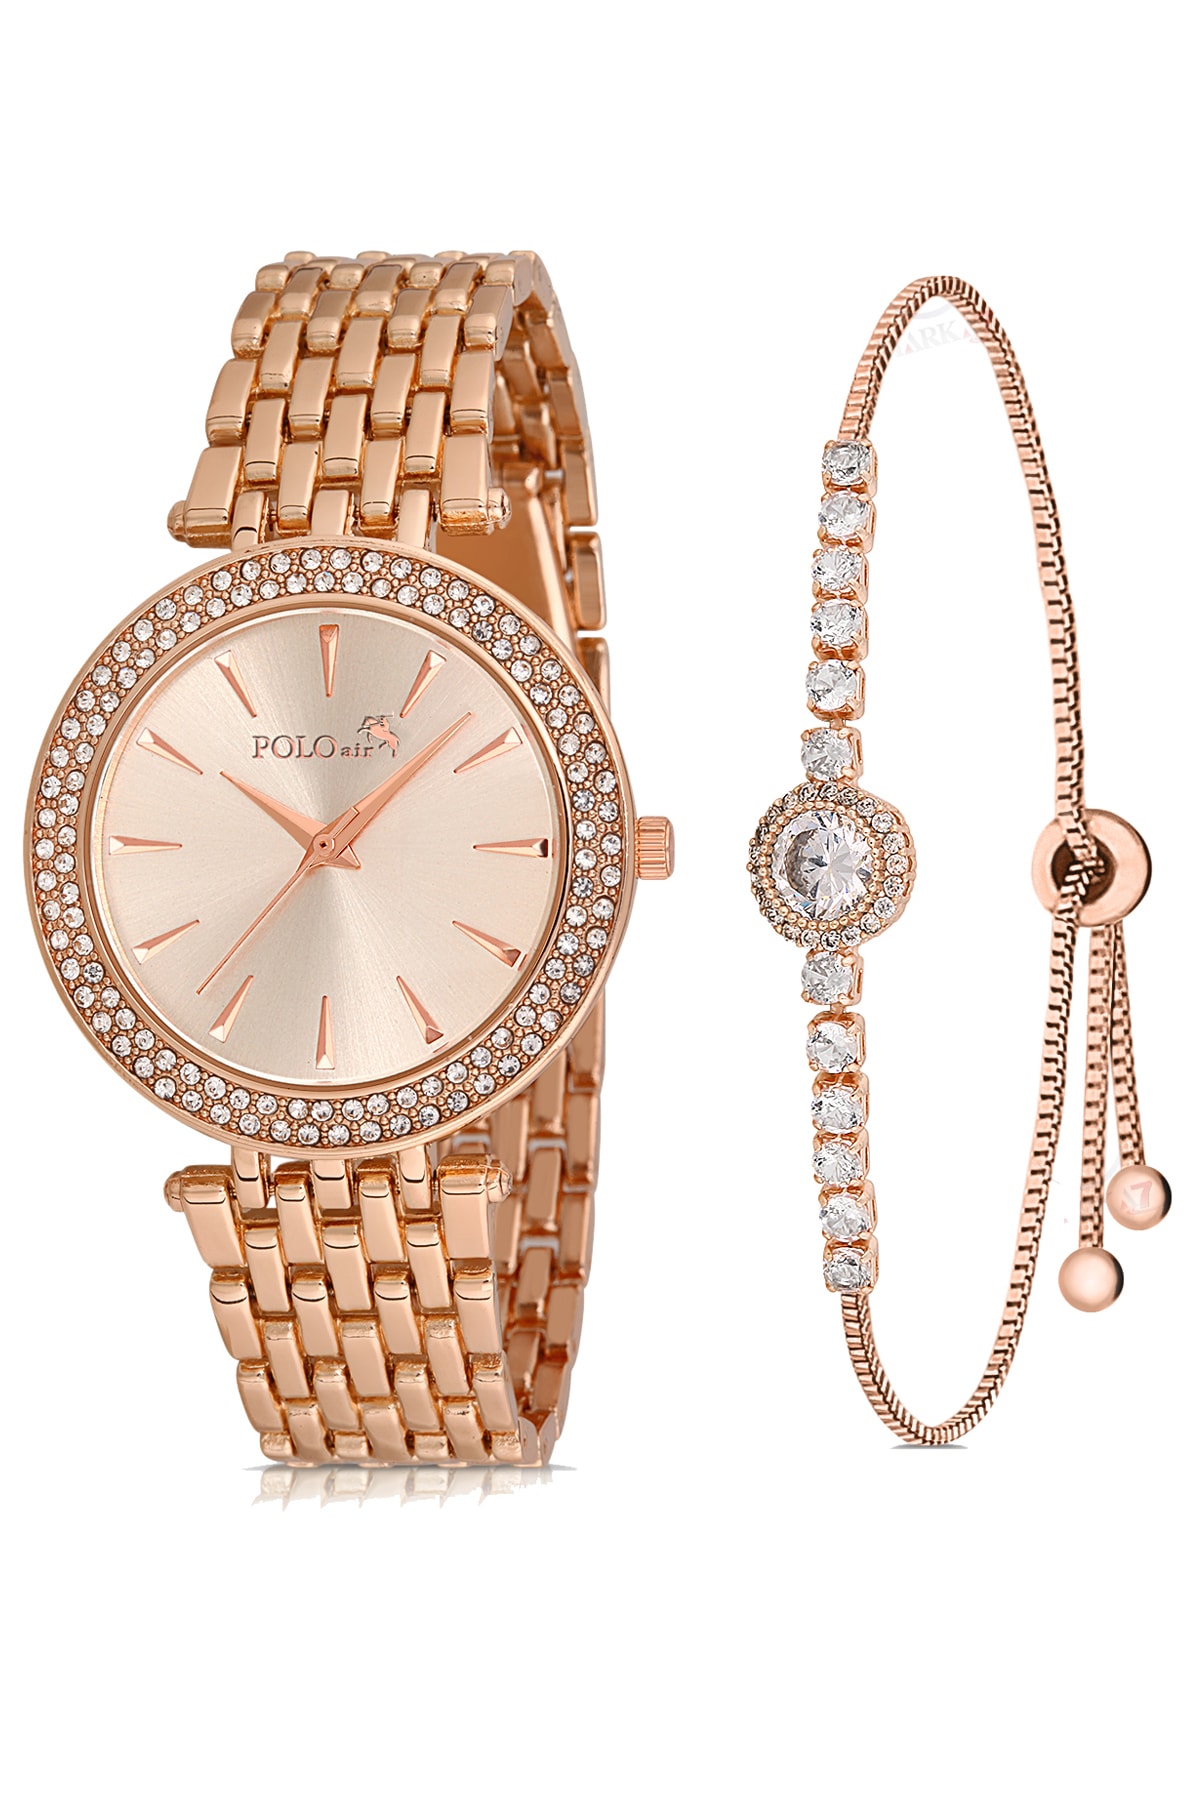 Polo Air Luxury Women's Wristwatch and Single Row Zircon Stone Elegant Waterway Bracelet Combination Copper Color